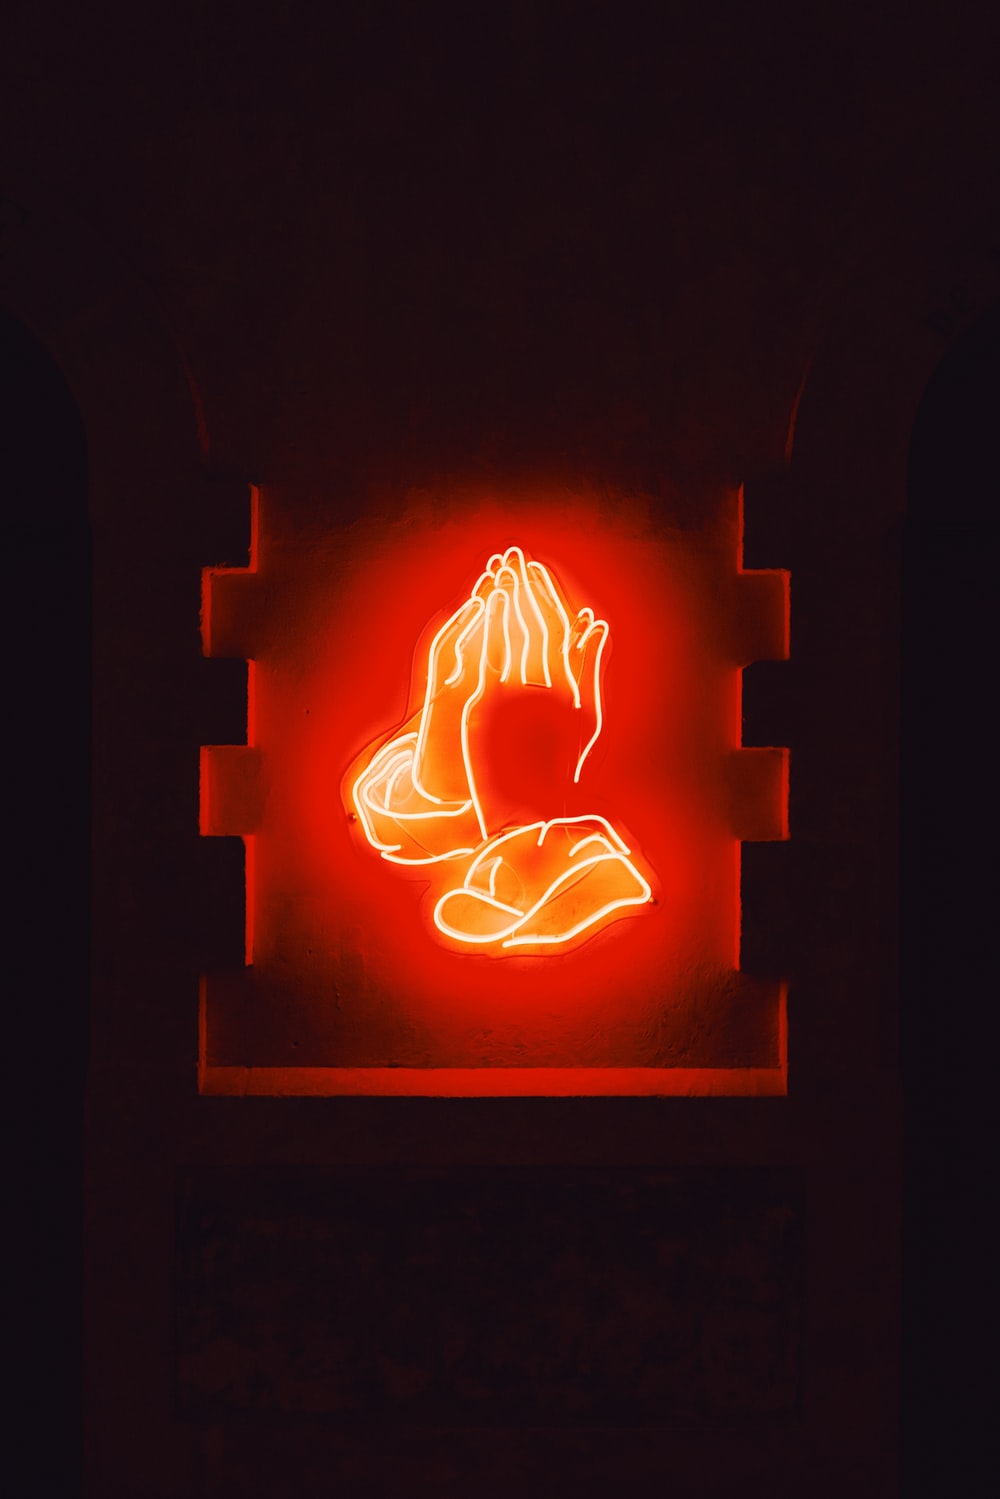 Praying Hand Picture. Download Free Image